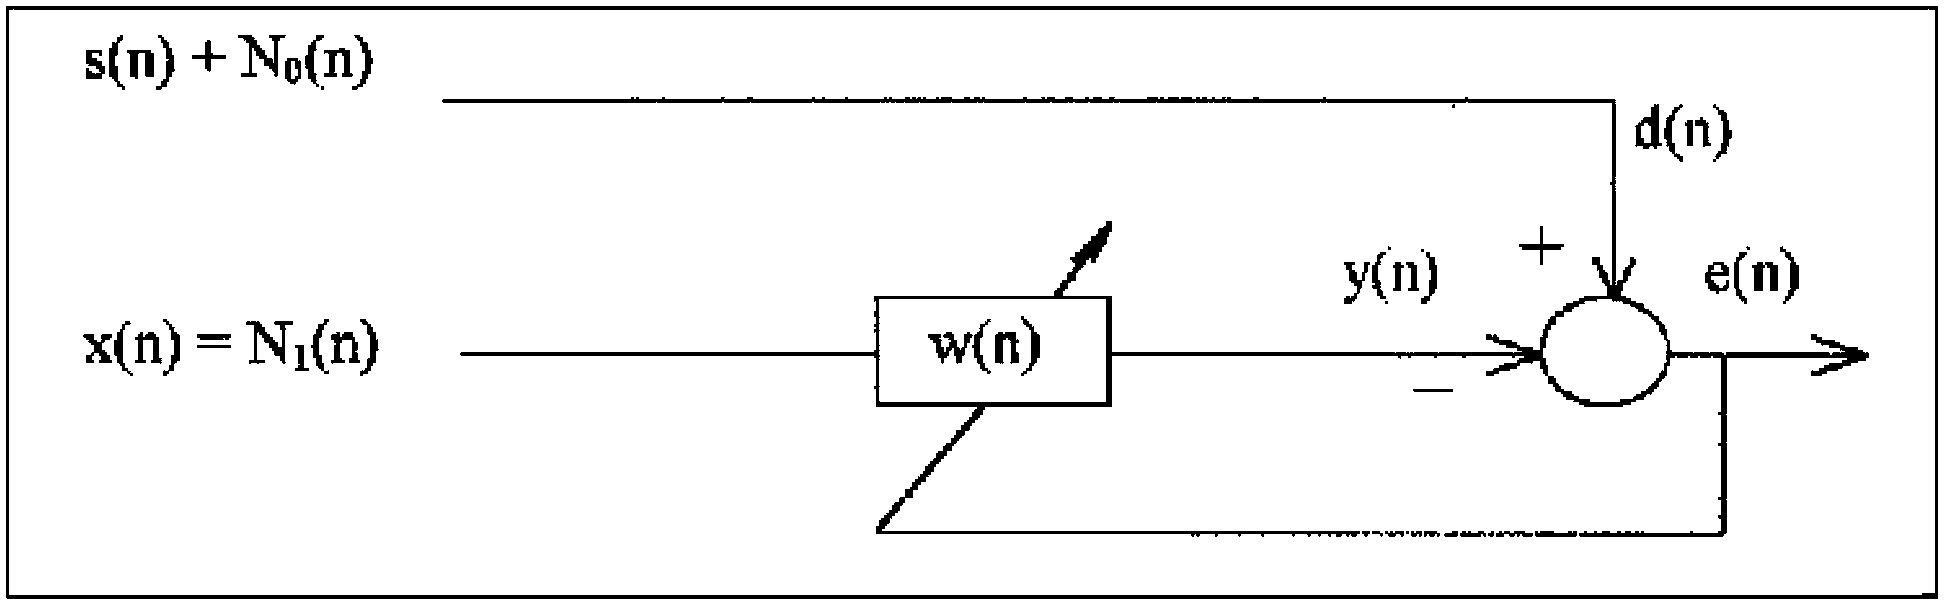 Method for processing electroencephalogram noise under nuclear magnetism